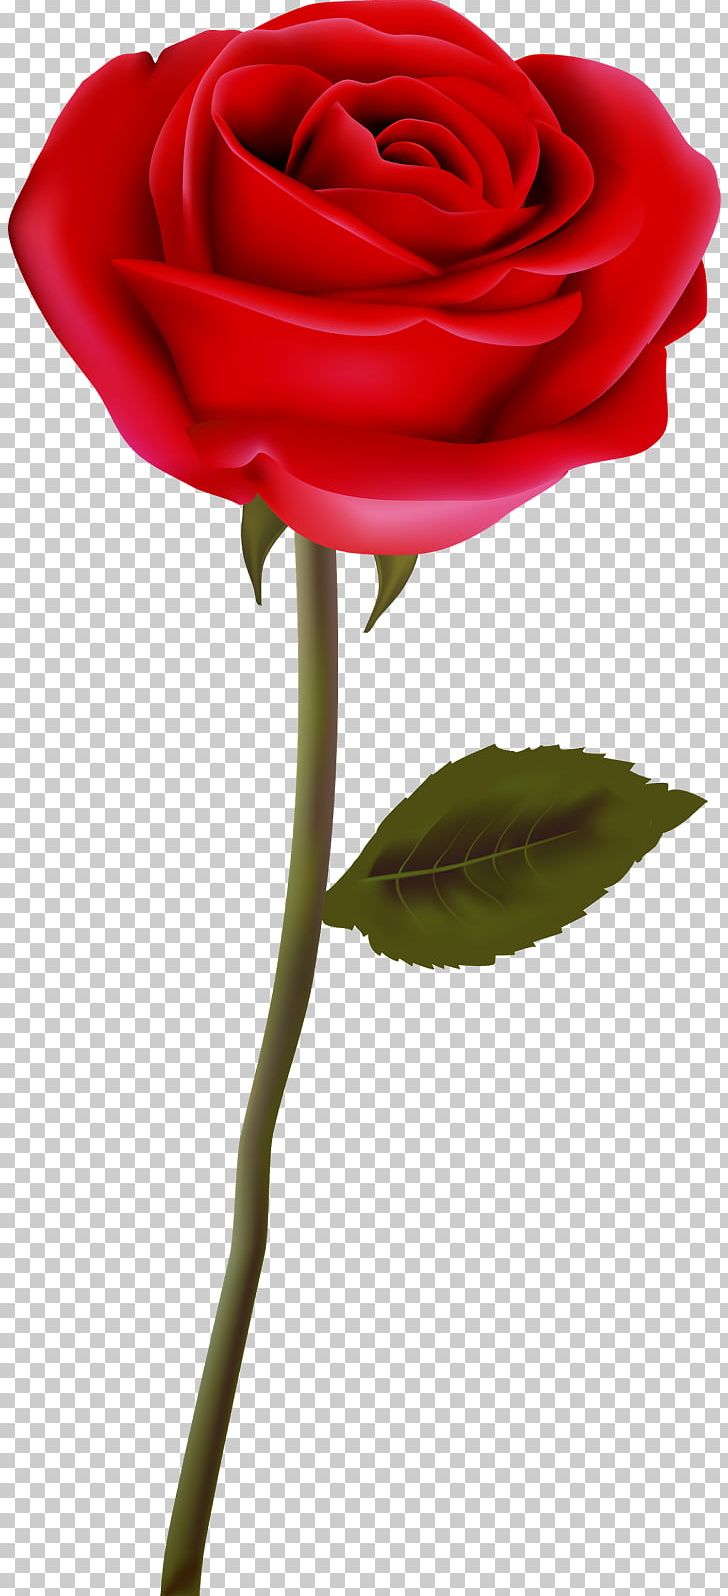 Garden Roses Flower PNG, Clipart, Blue Rose, Cut Flowers, Download, Floral Design, Floristry Free PNG Download